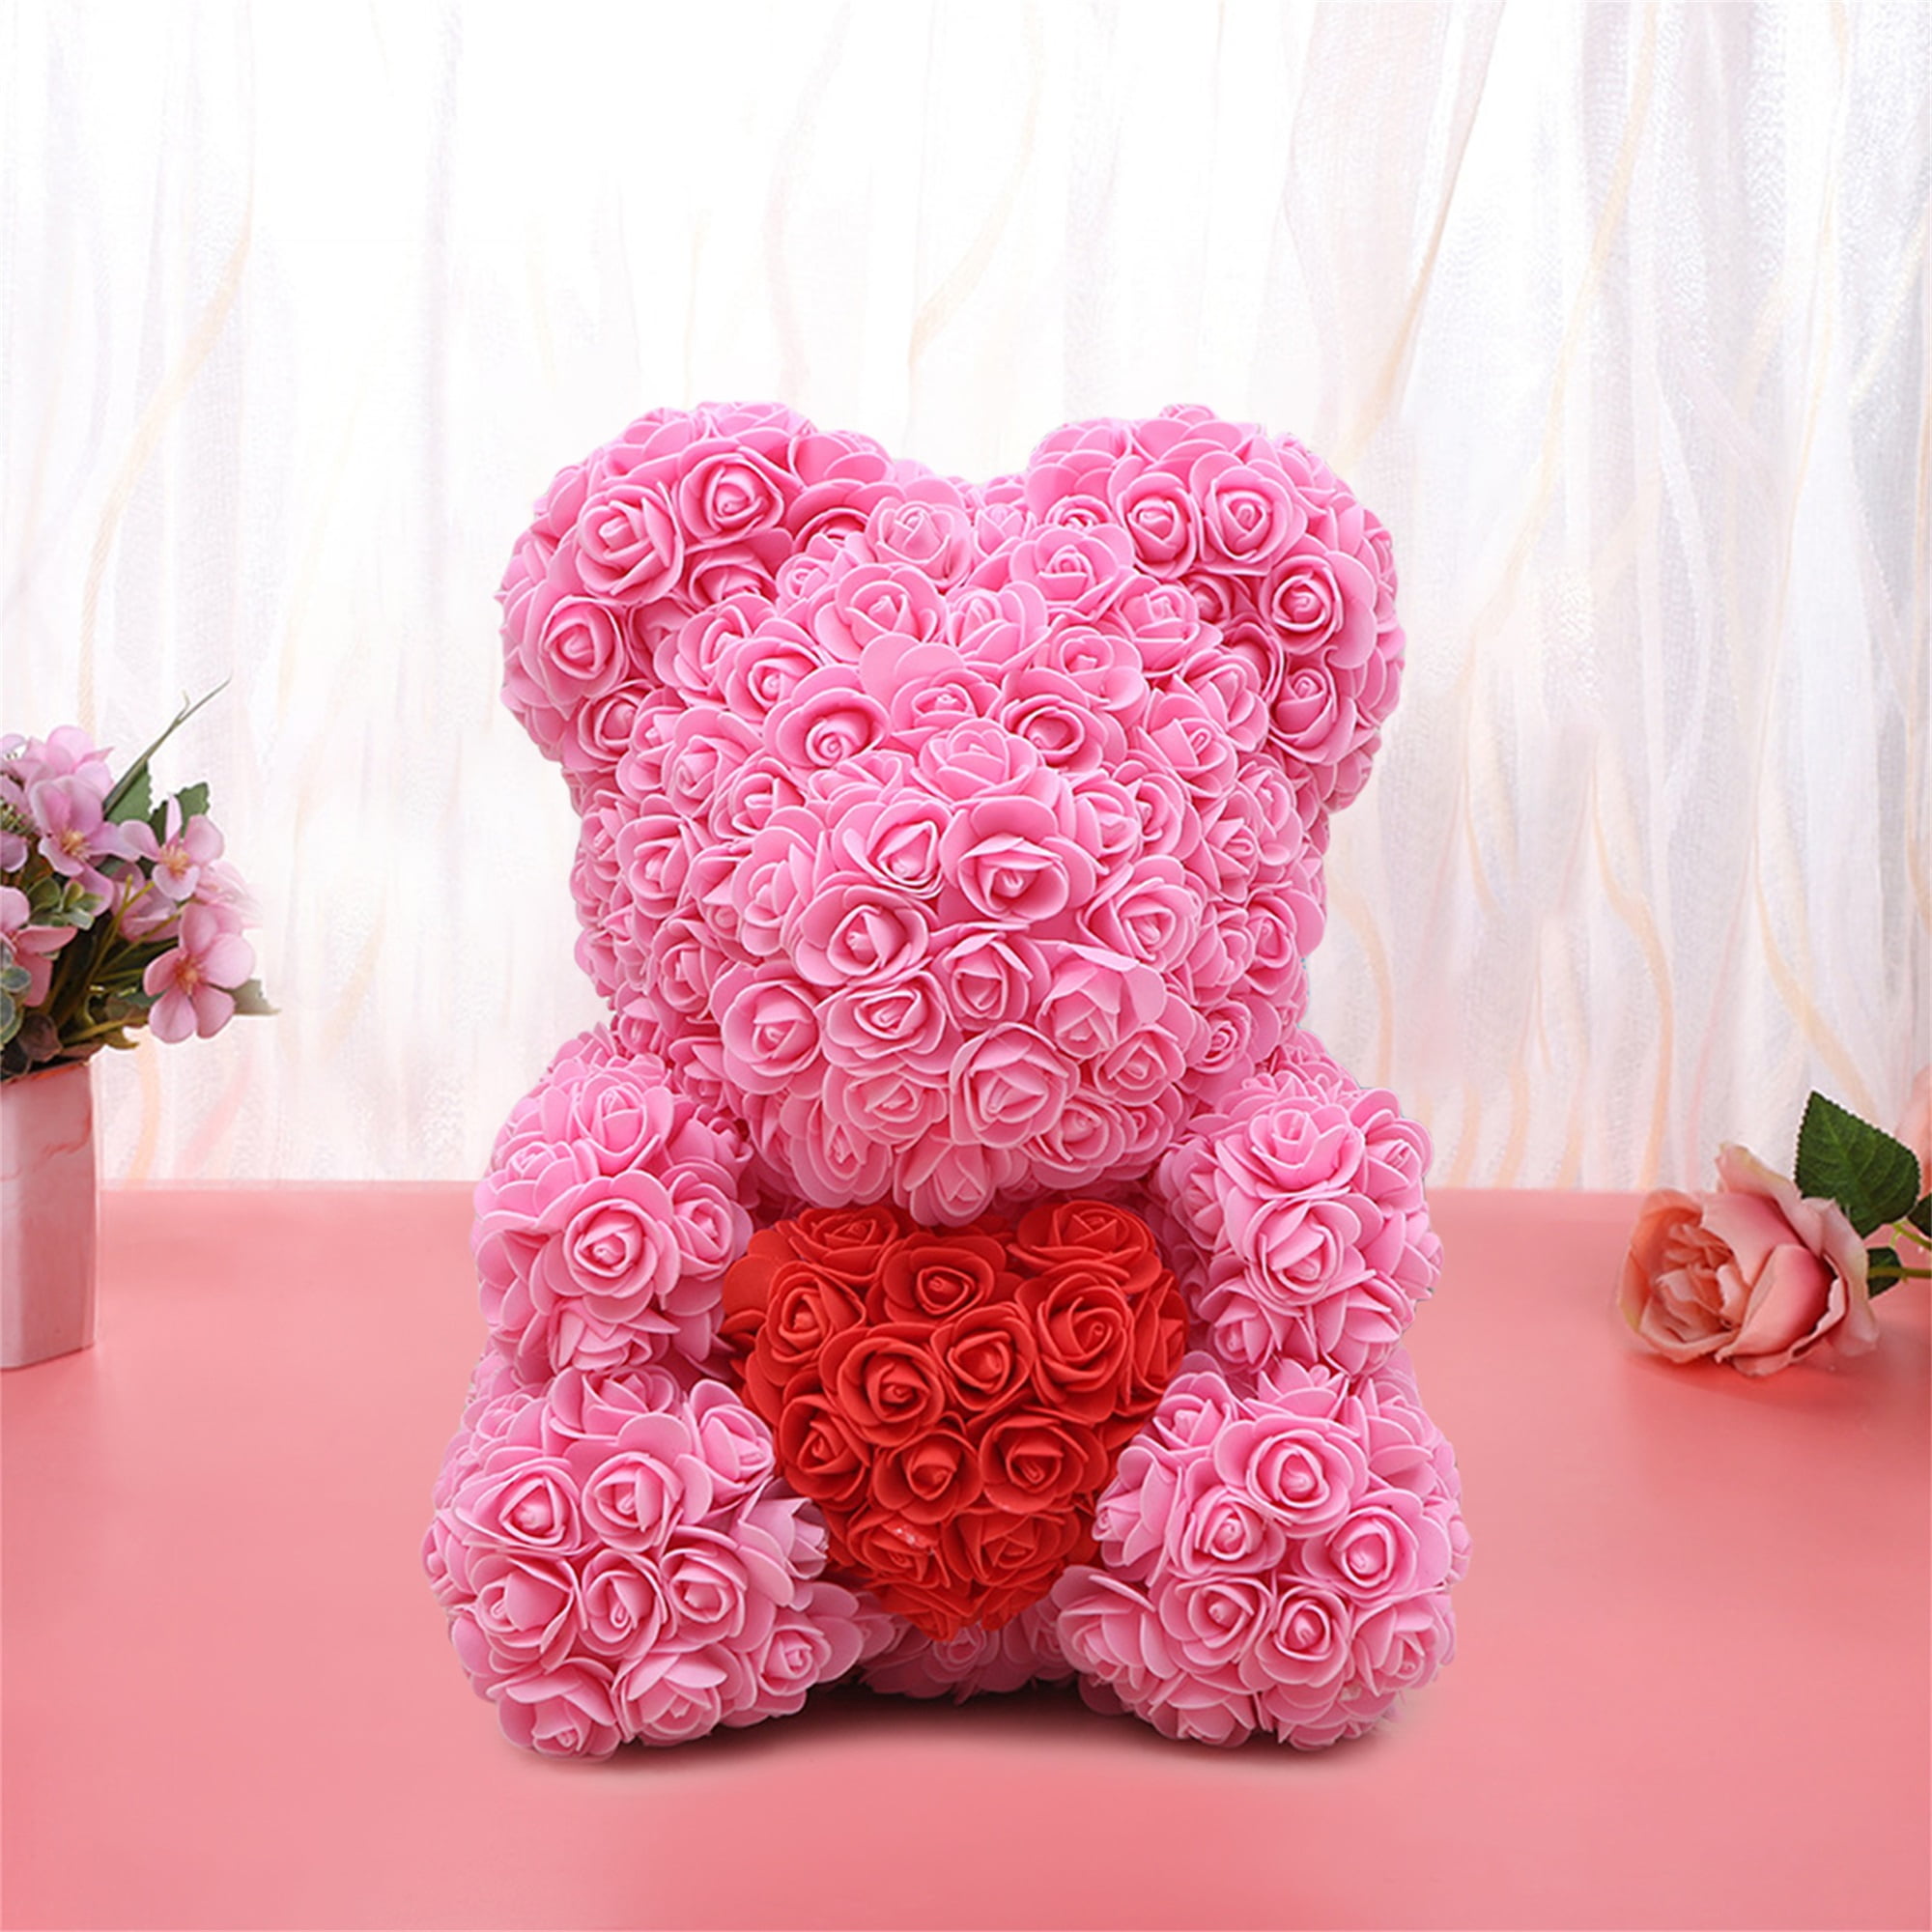 Rose Bear Flower Teddy Doll Gift For Girlfriend Wedding Birthday Valentine's Day